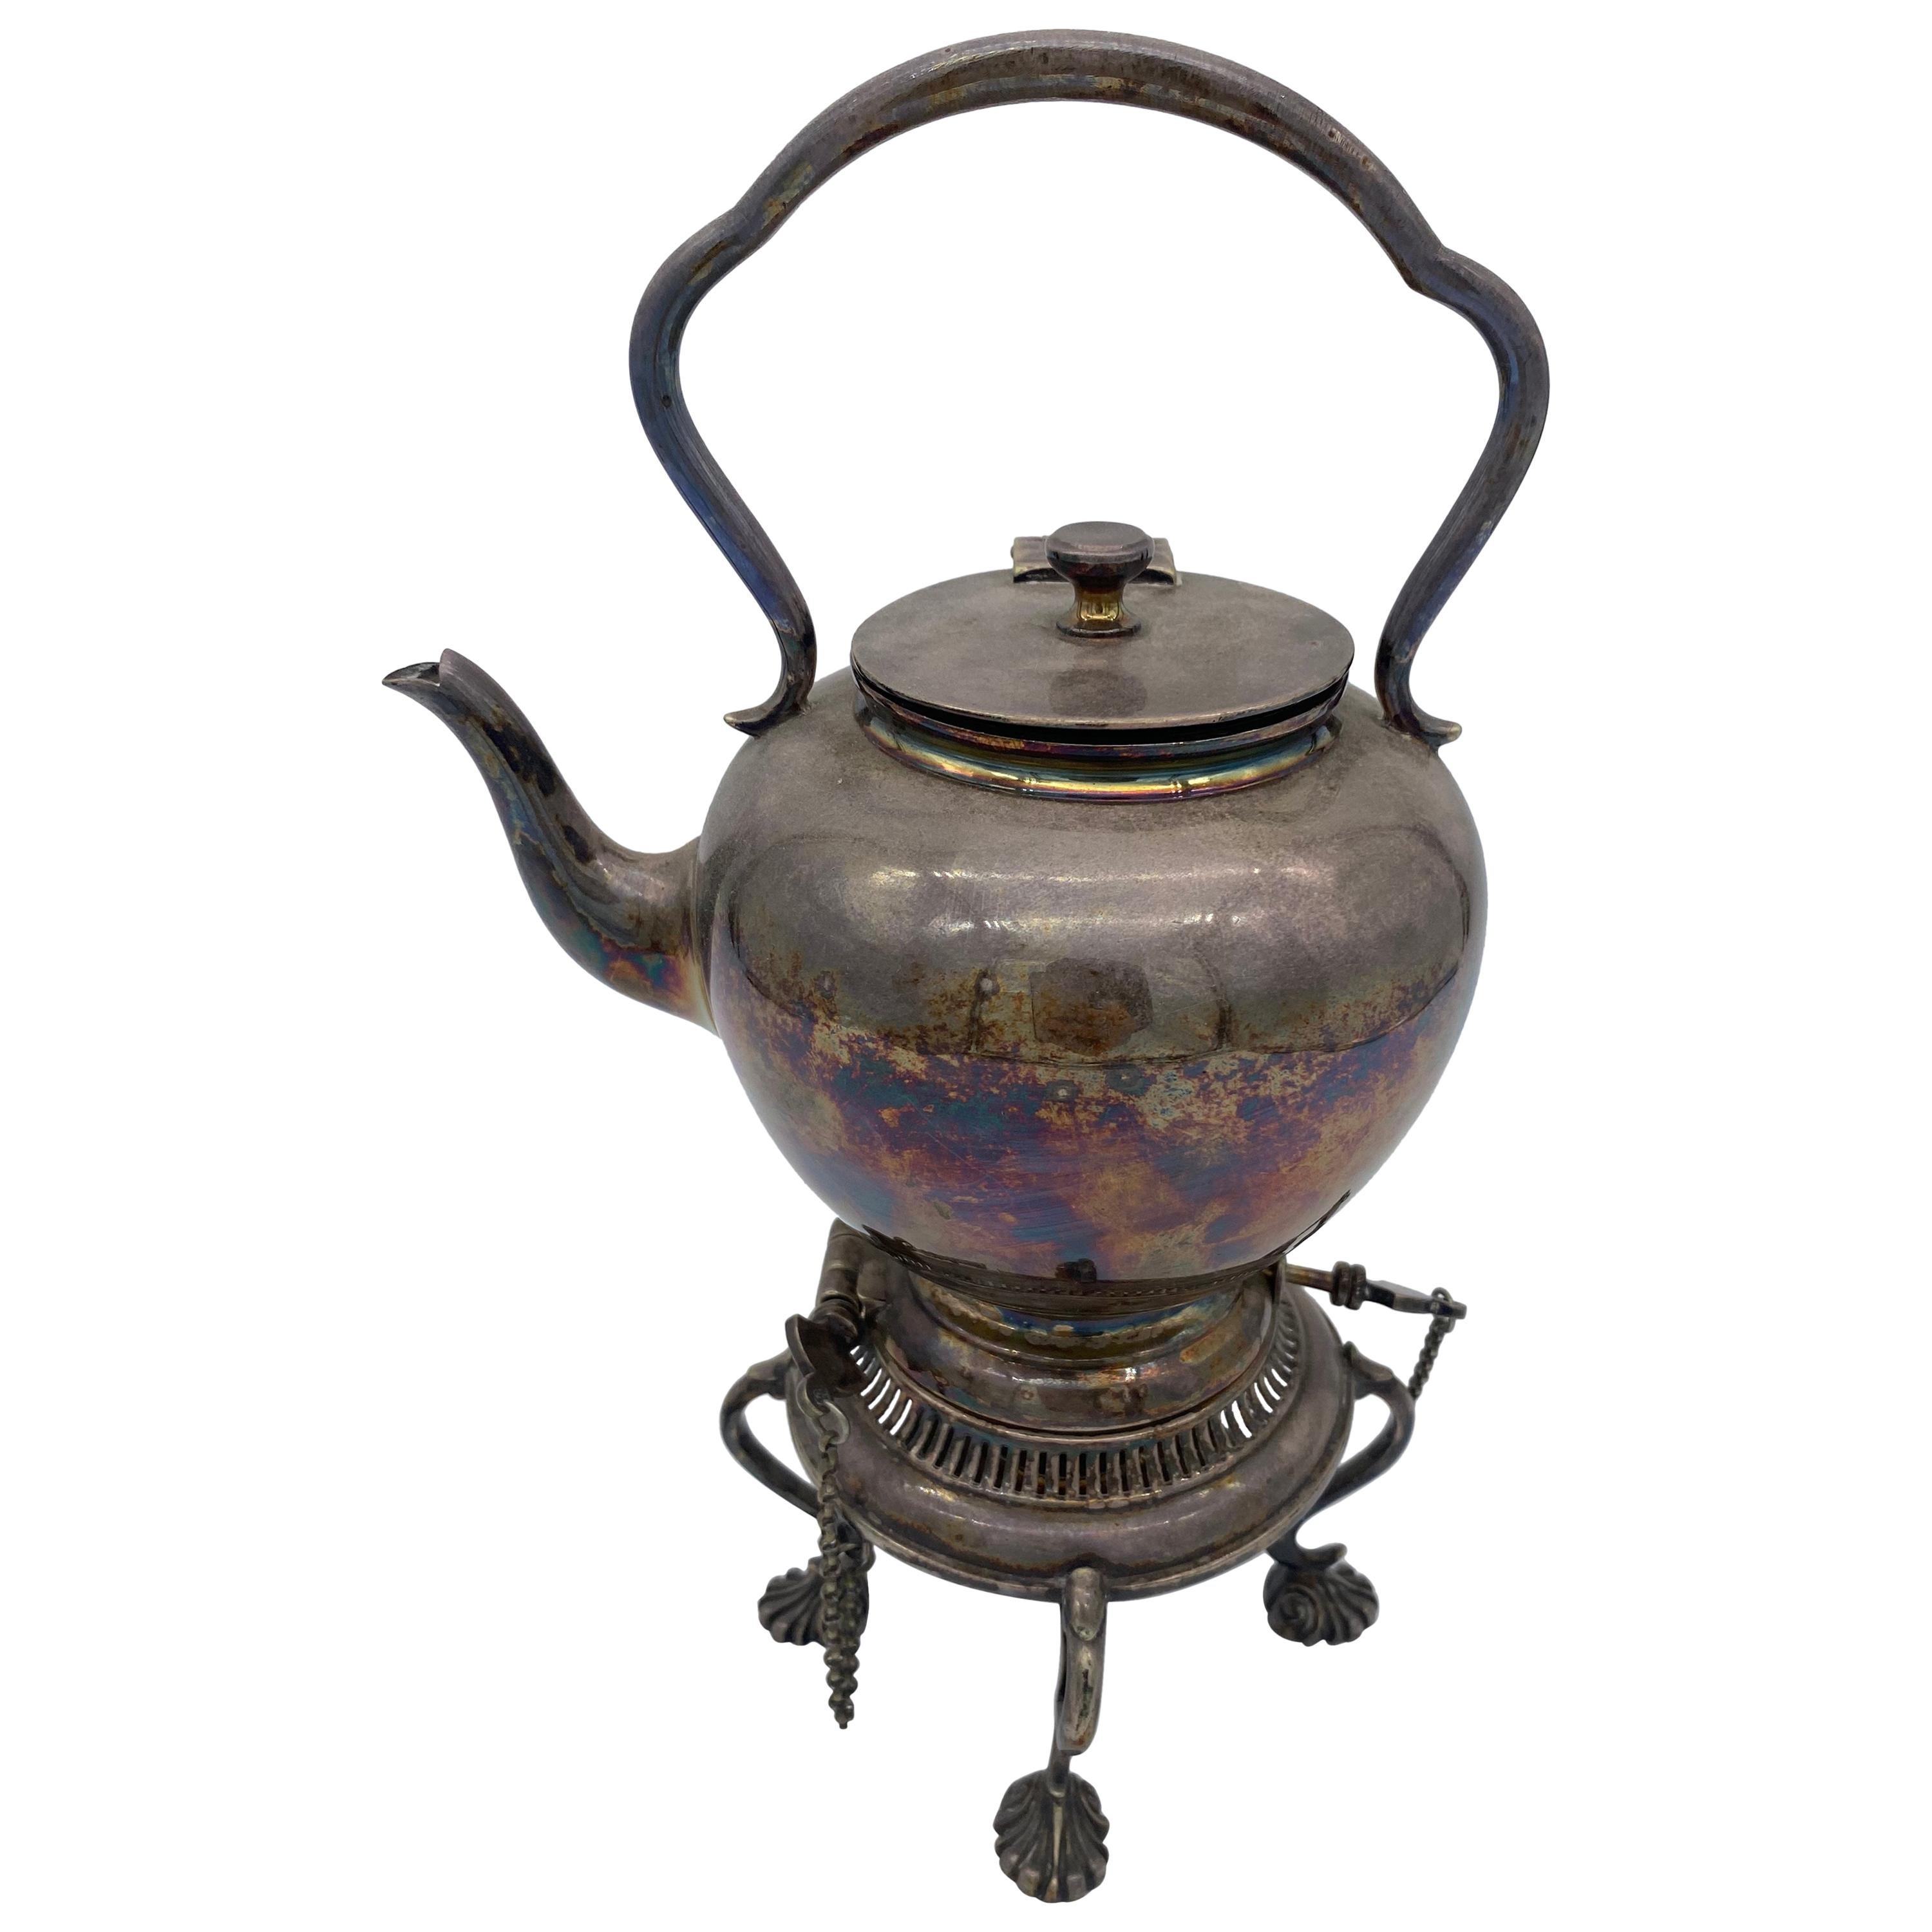 Do silver teapots keep tea hot?